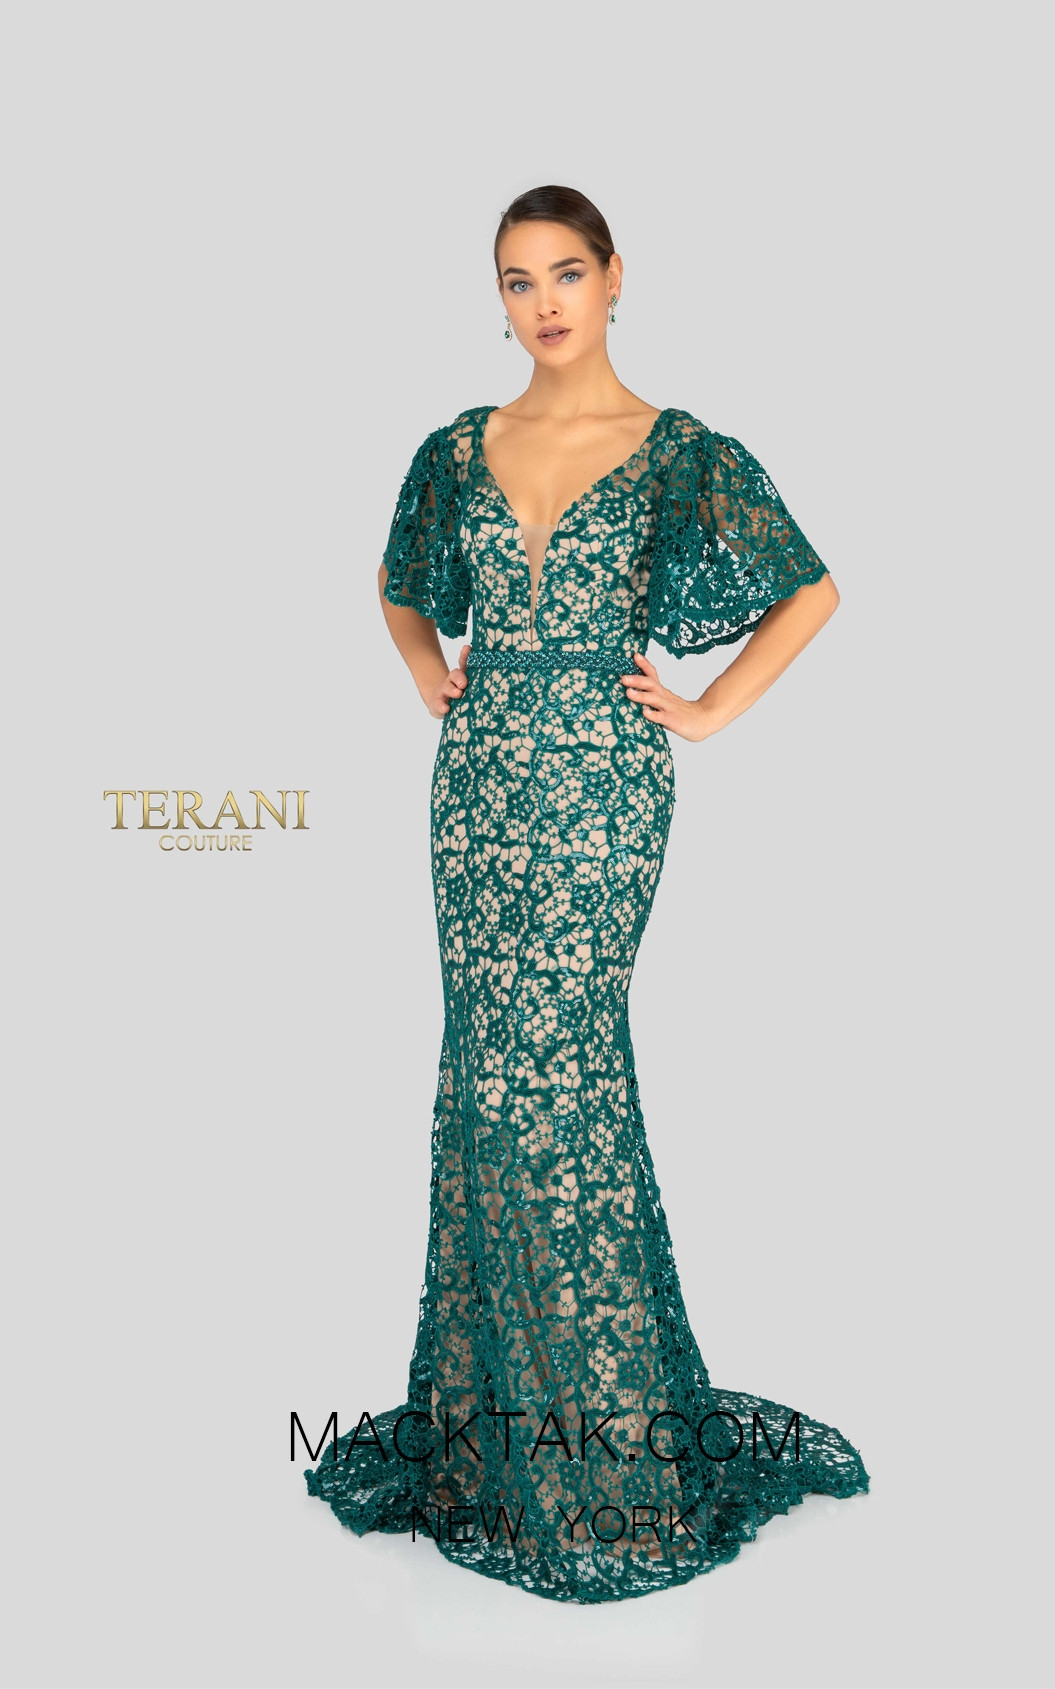 terani green dress